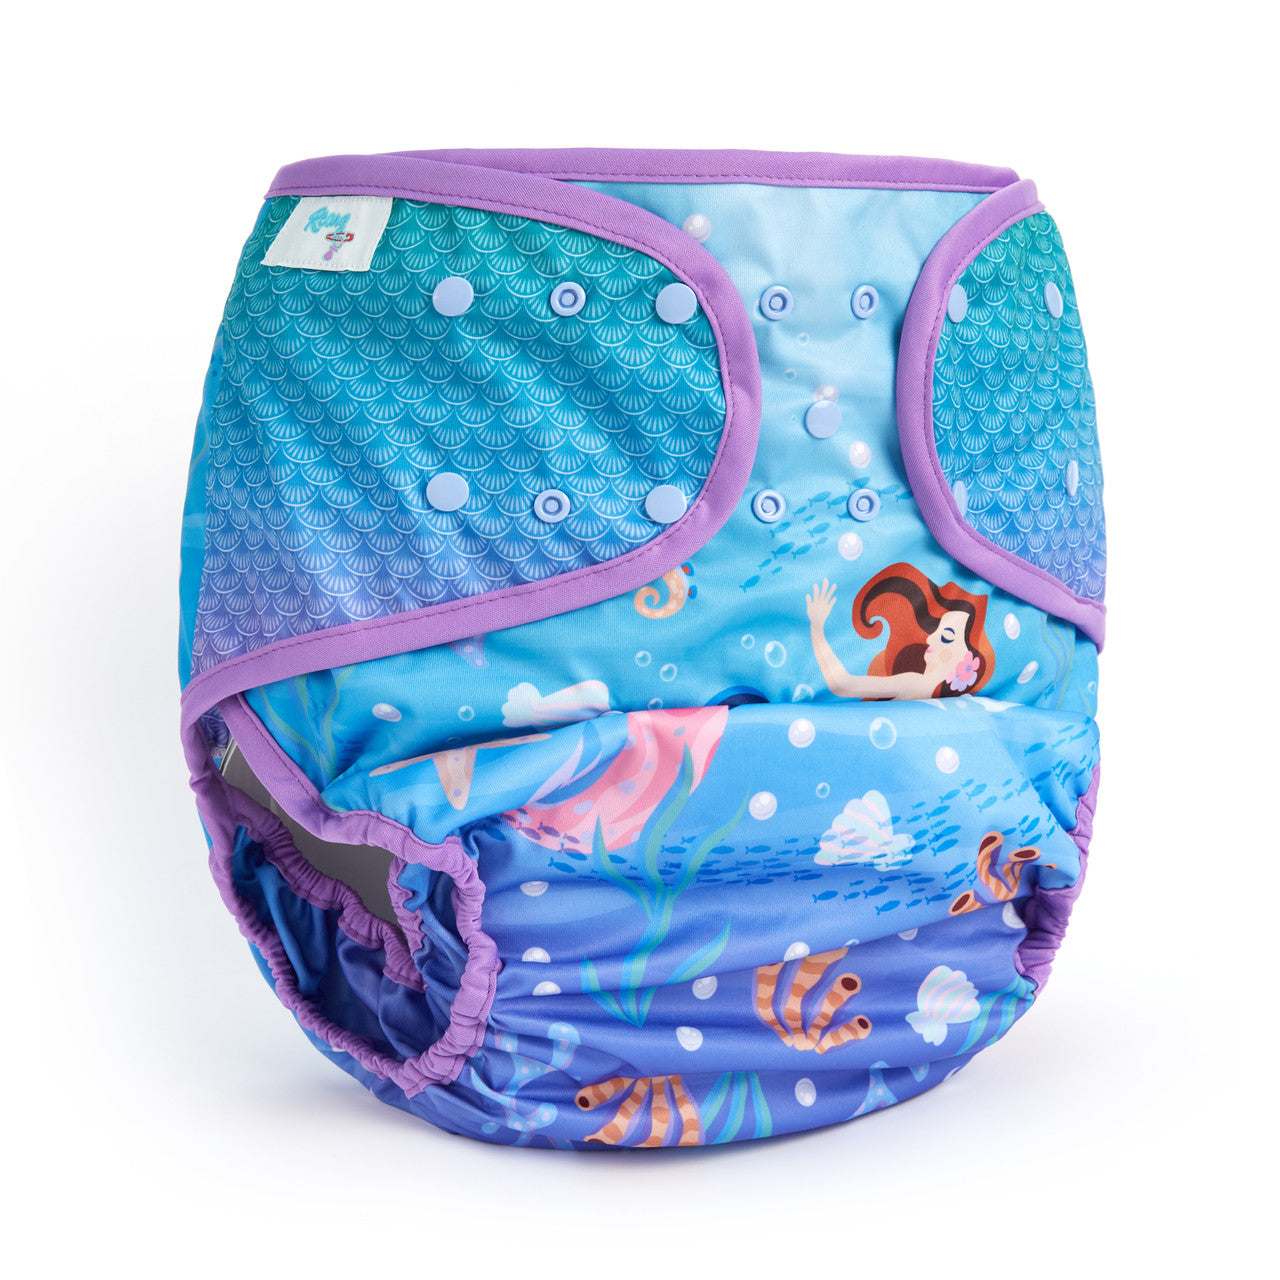 FLASH SALE! Rearz MEGA Disposable Diaper: Mermaid Tales